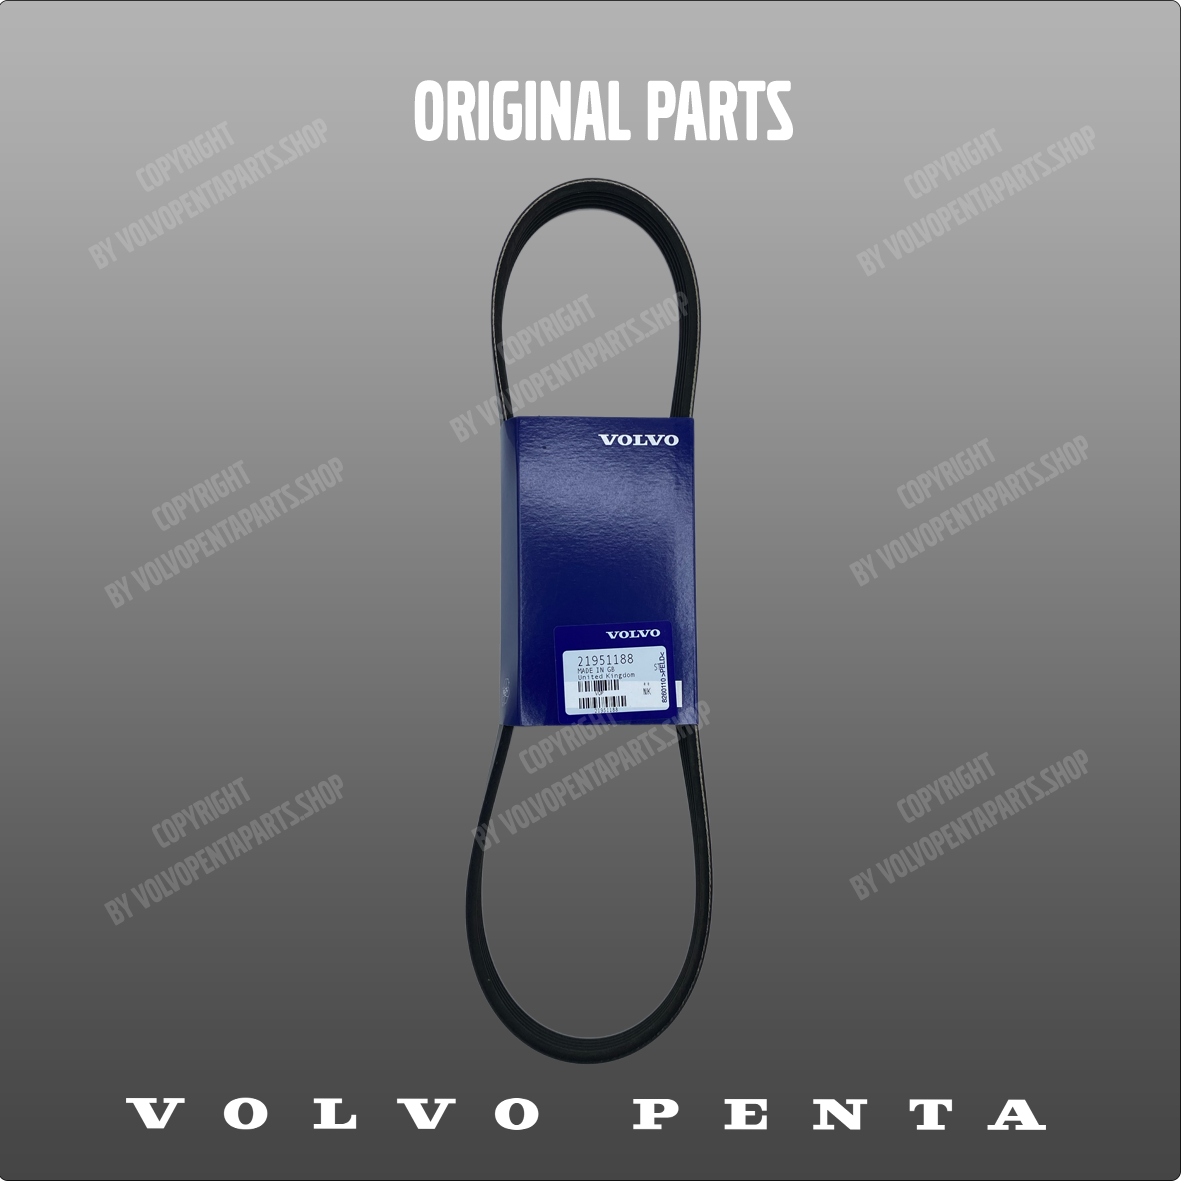 Volvo Penta belt 21951188